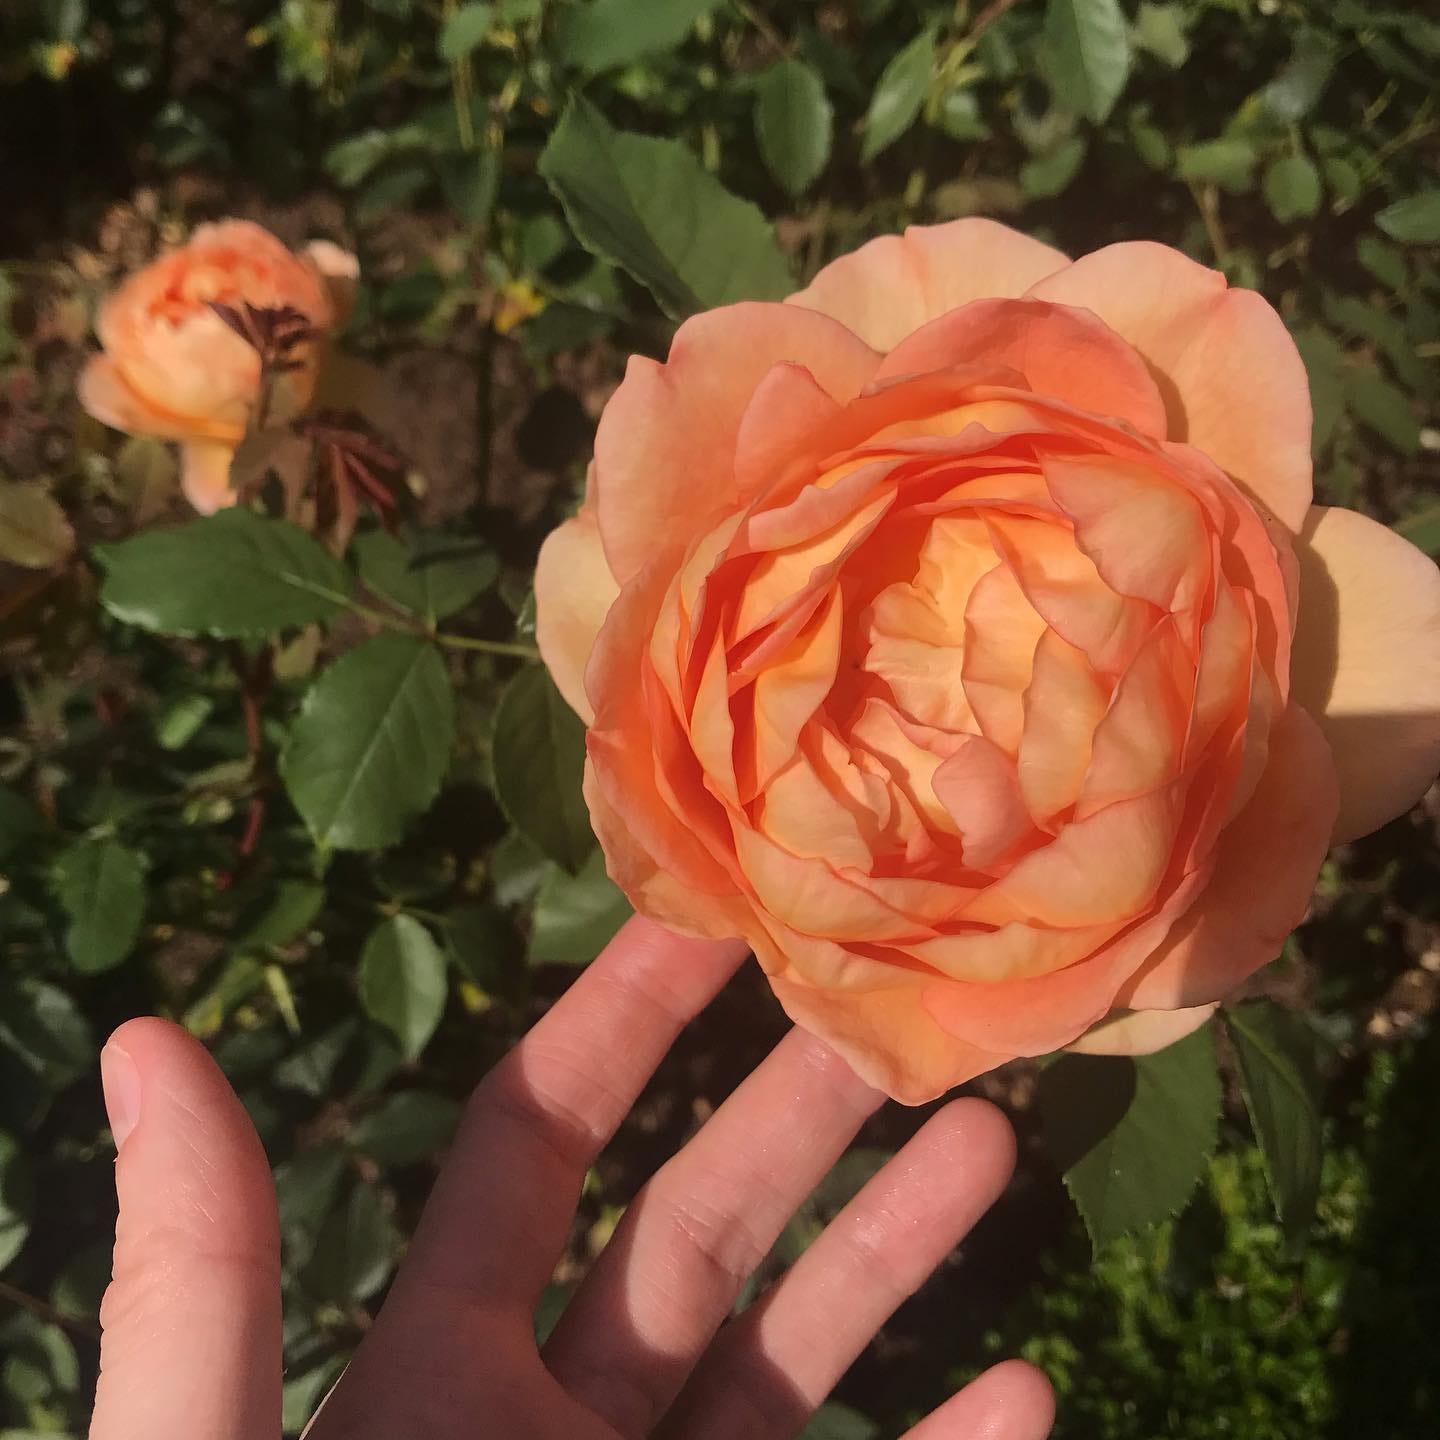 Peach rose held in my hand